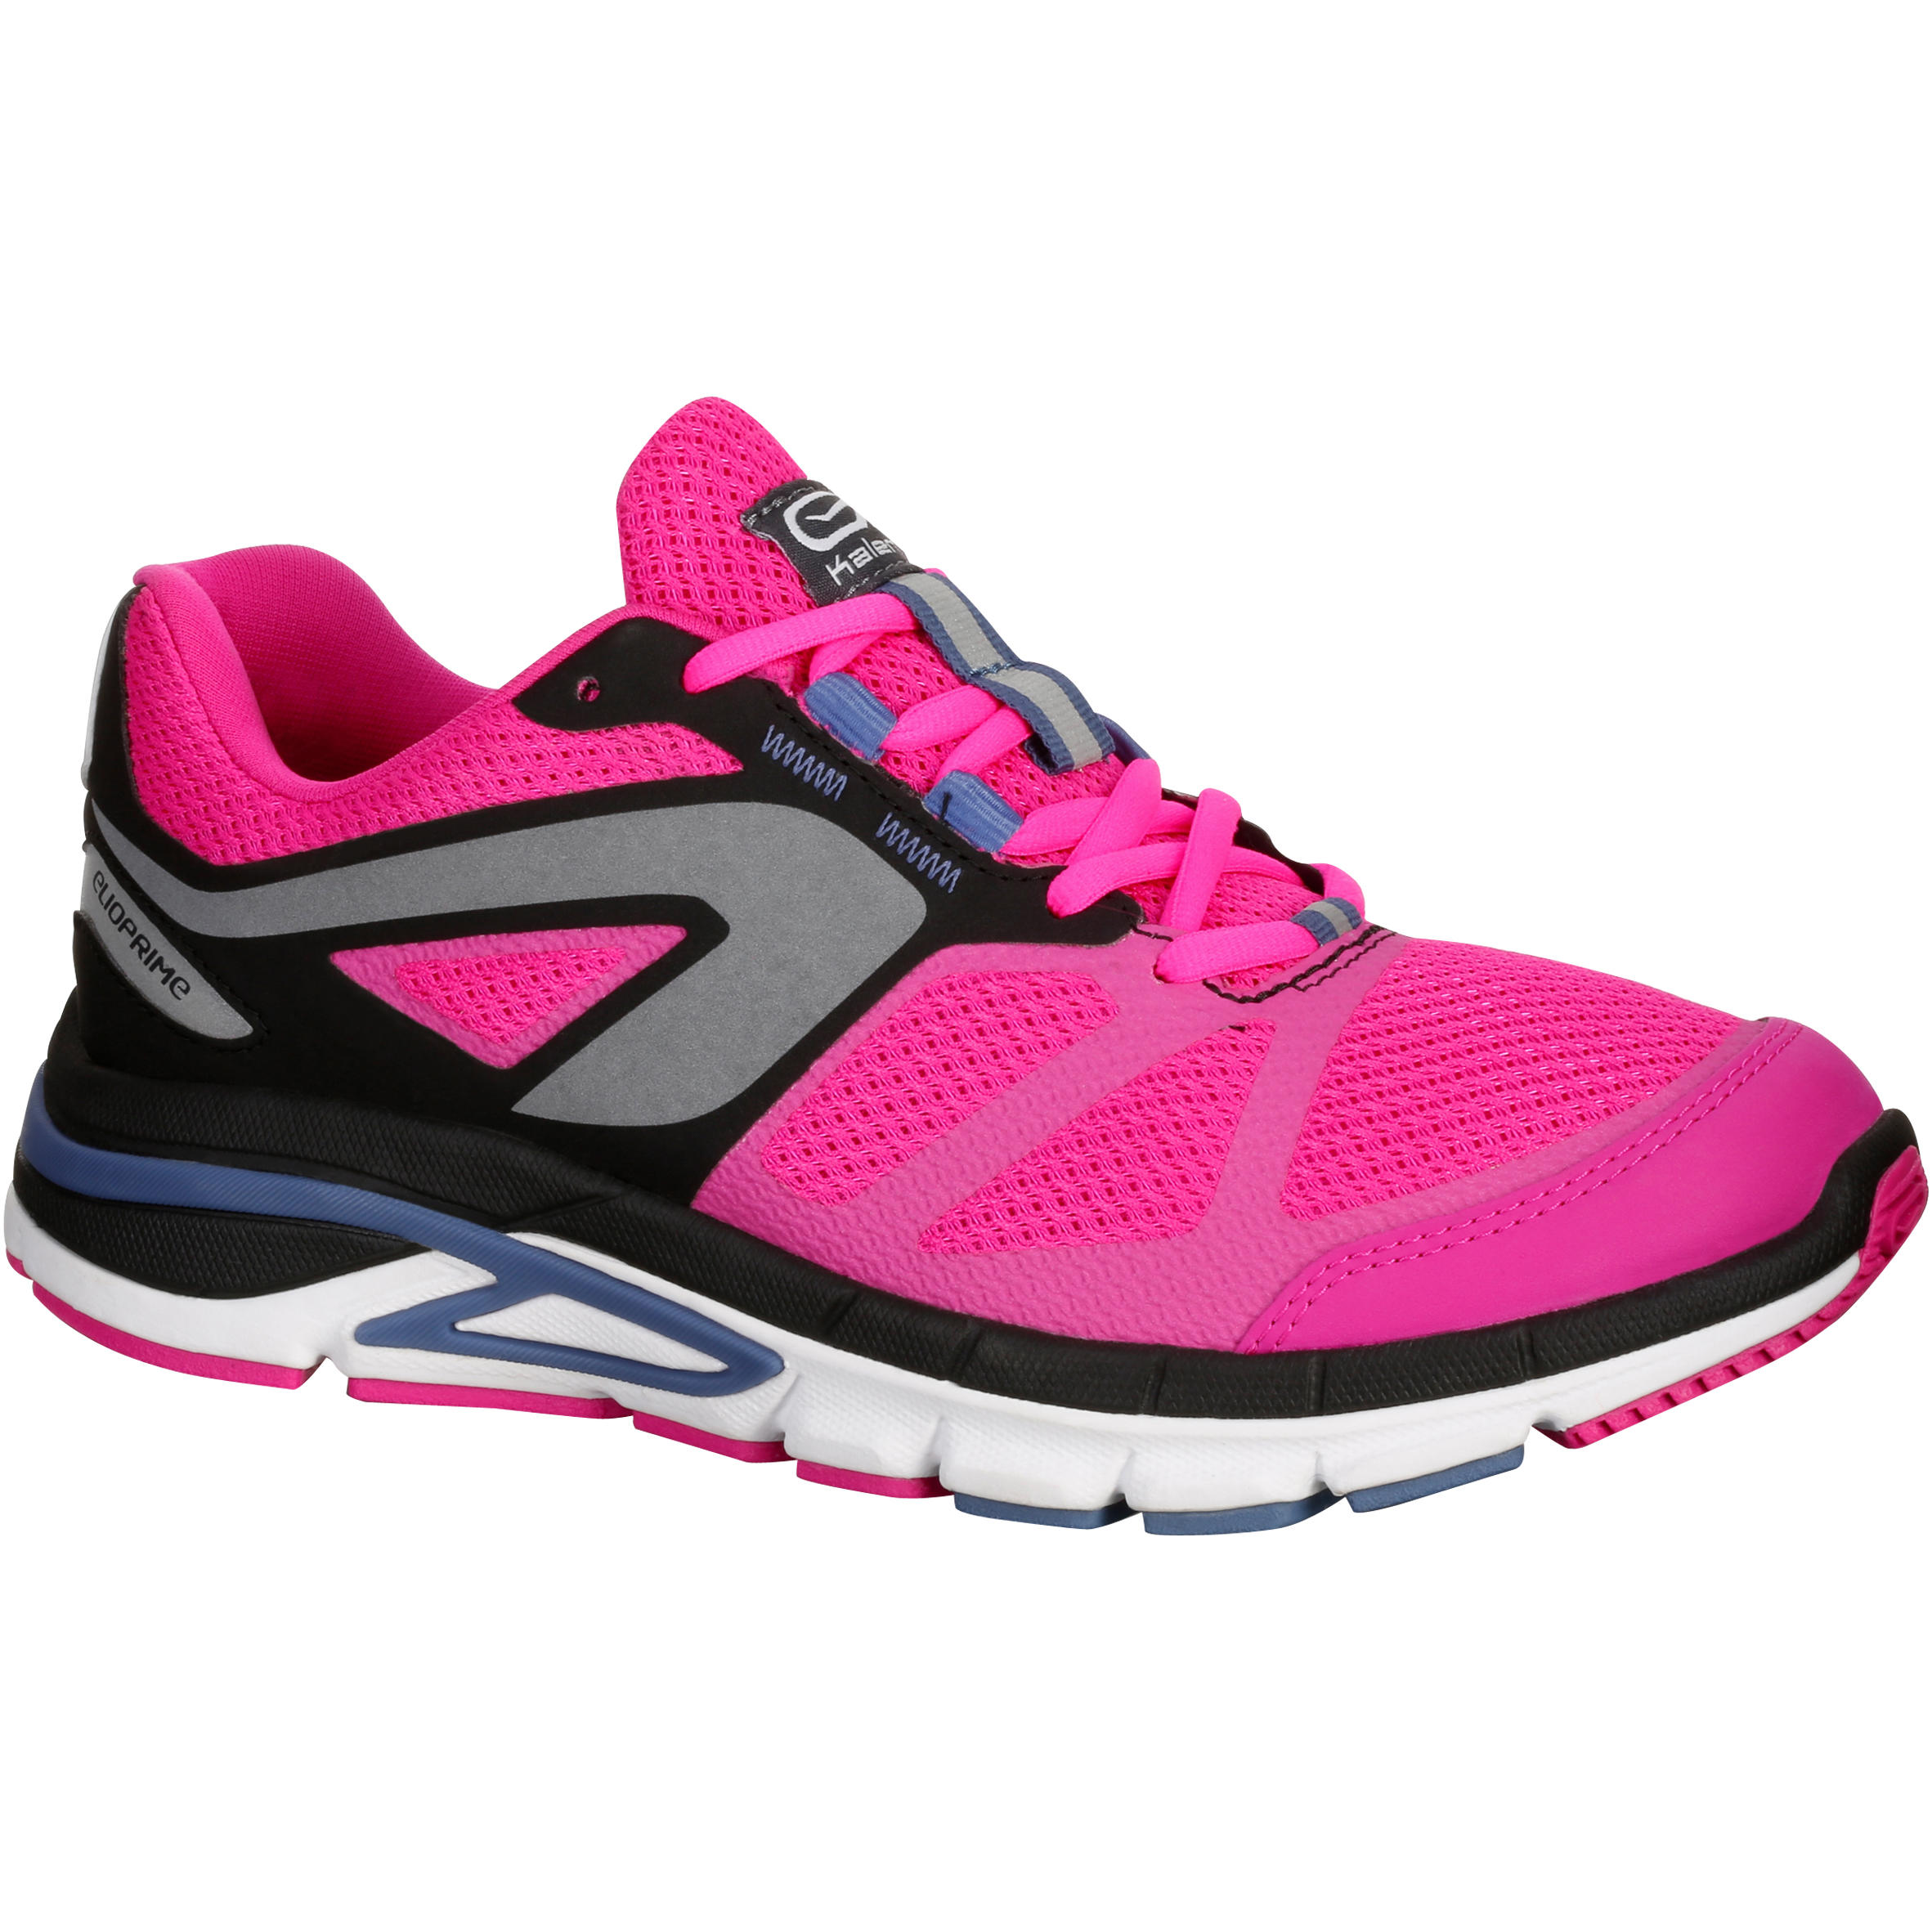 Run Elioprime Women's Running Shoes - Pink